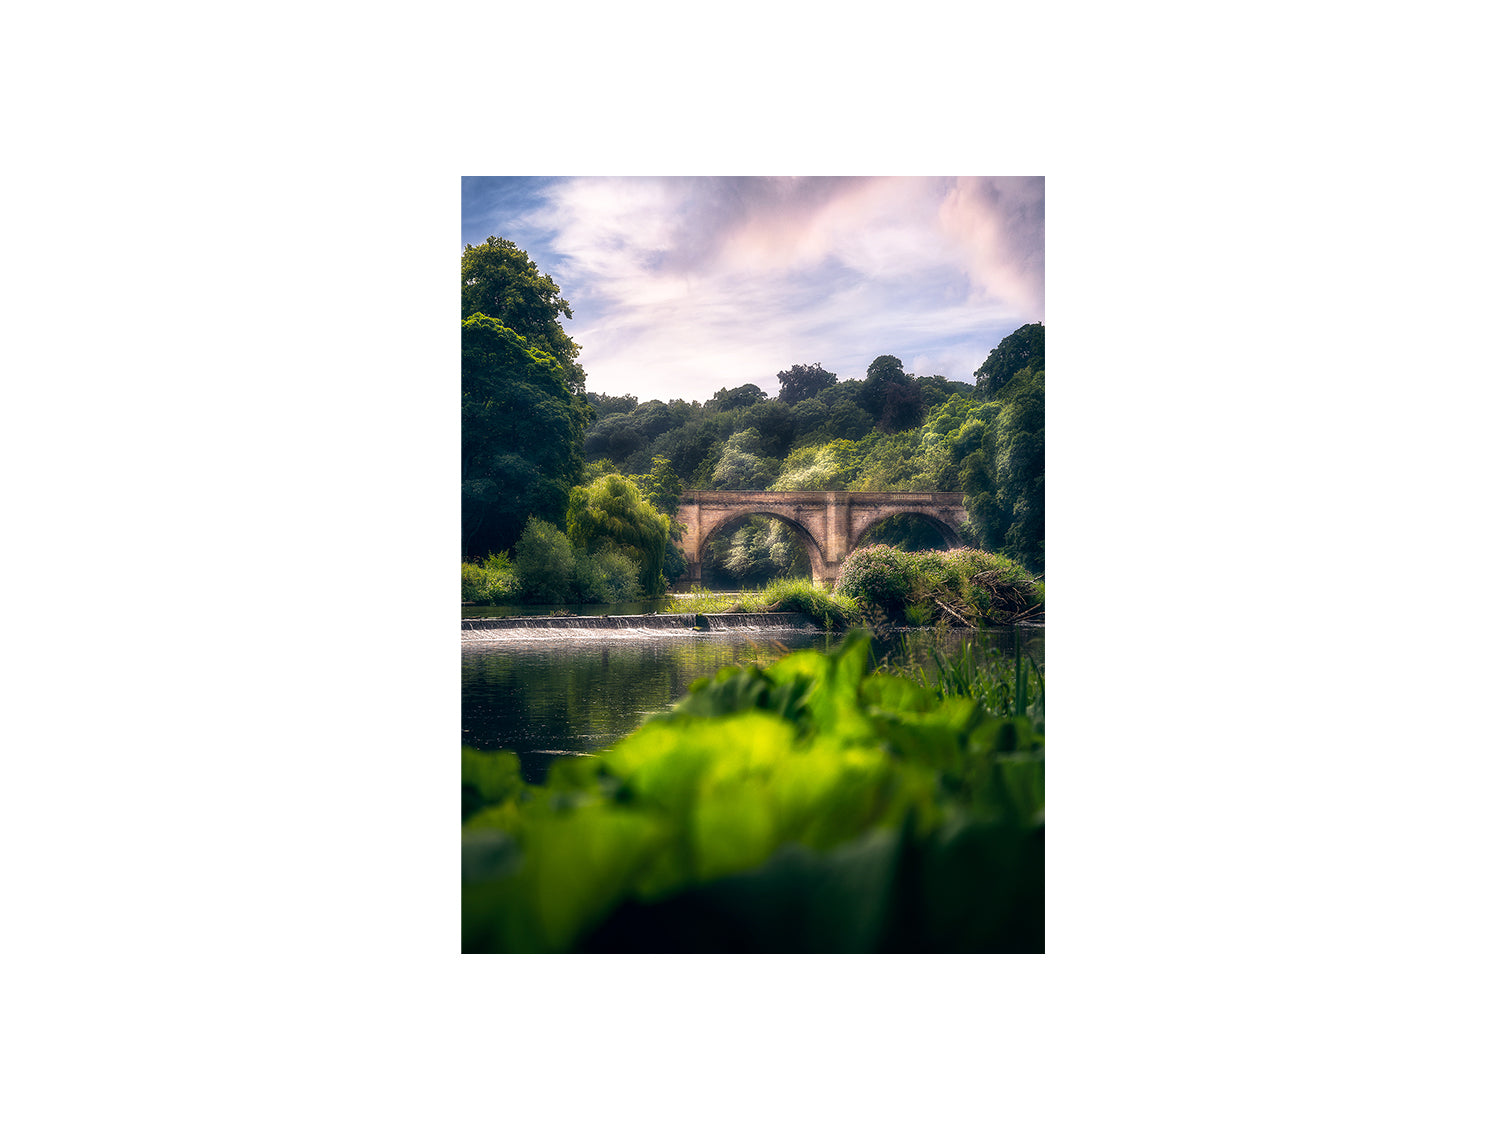 Prebends Bridge, Durham - England